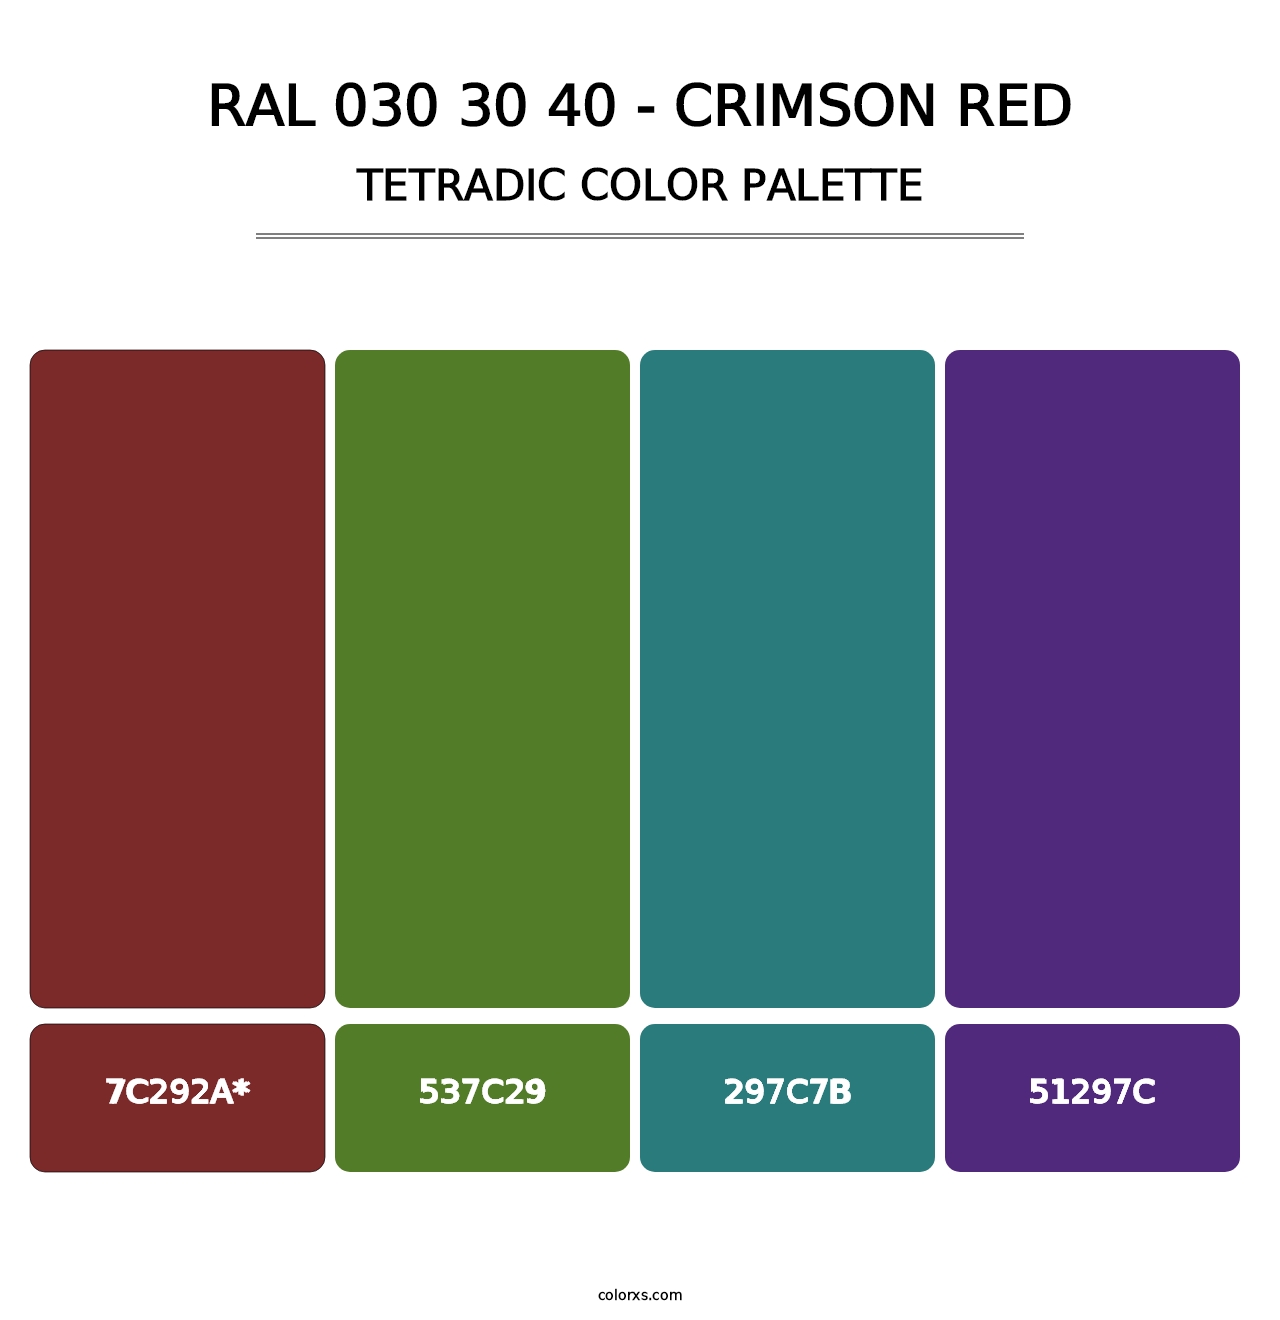 RAL 030 30 40 - Crimson Red - Tetradic Color Palette